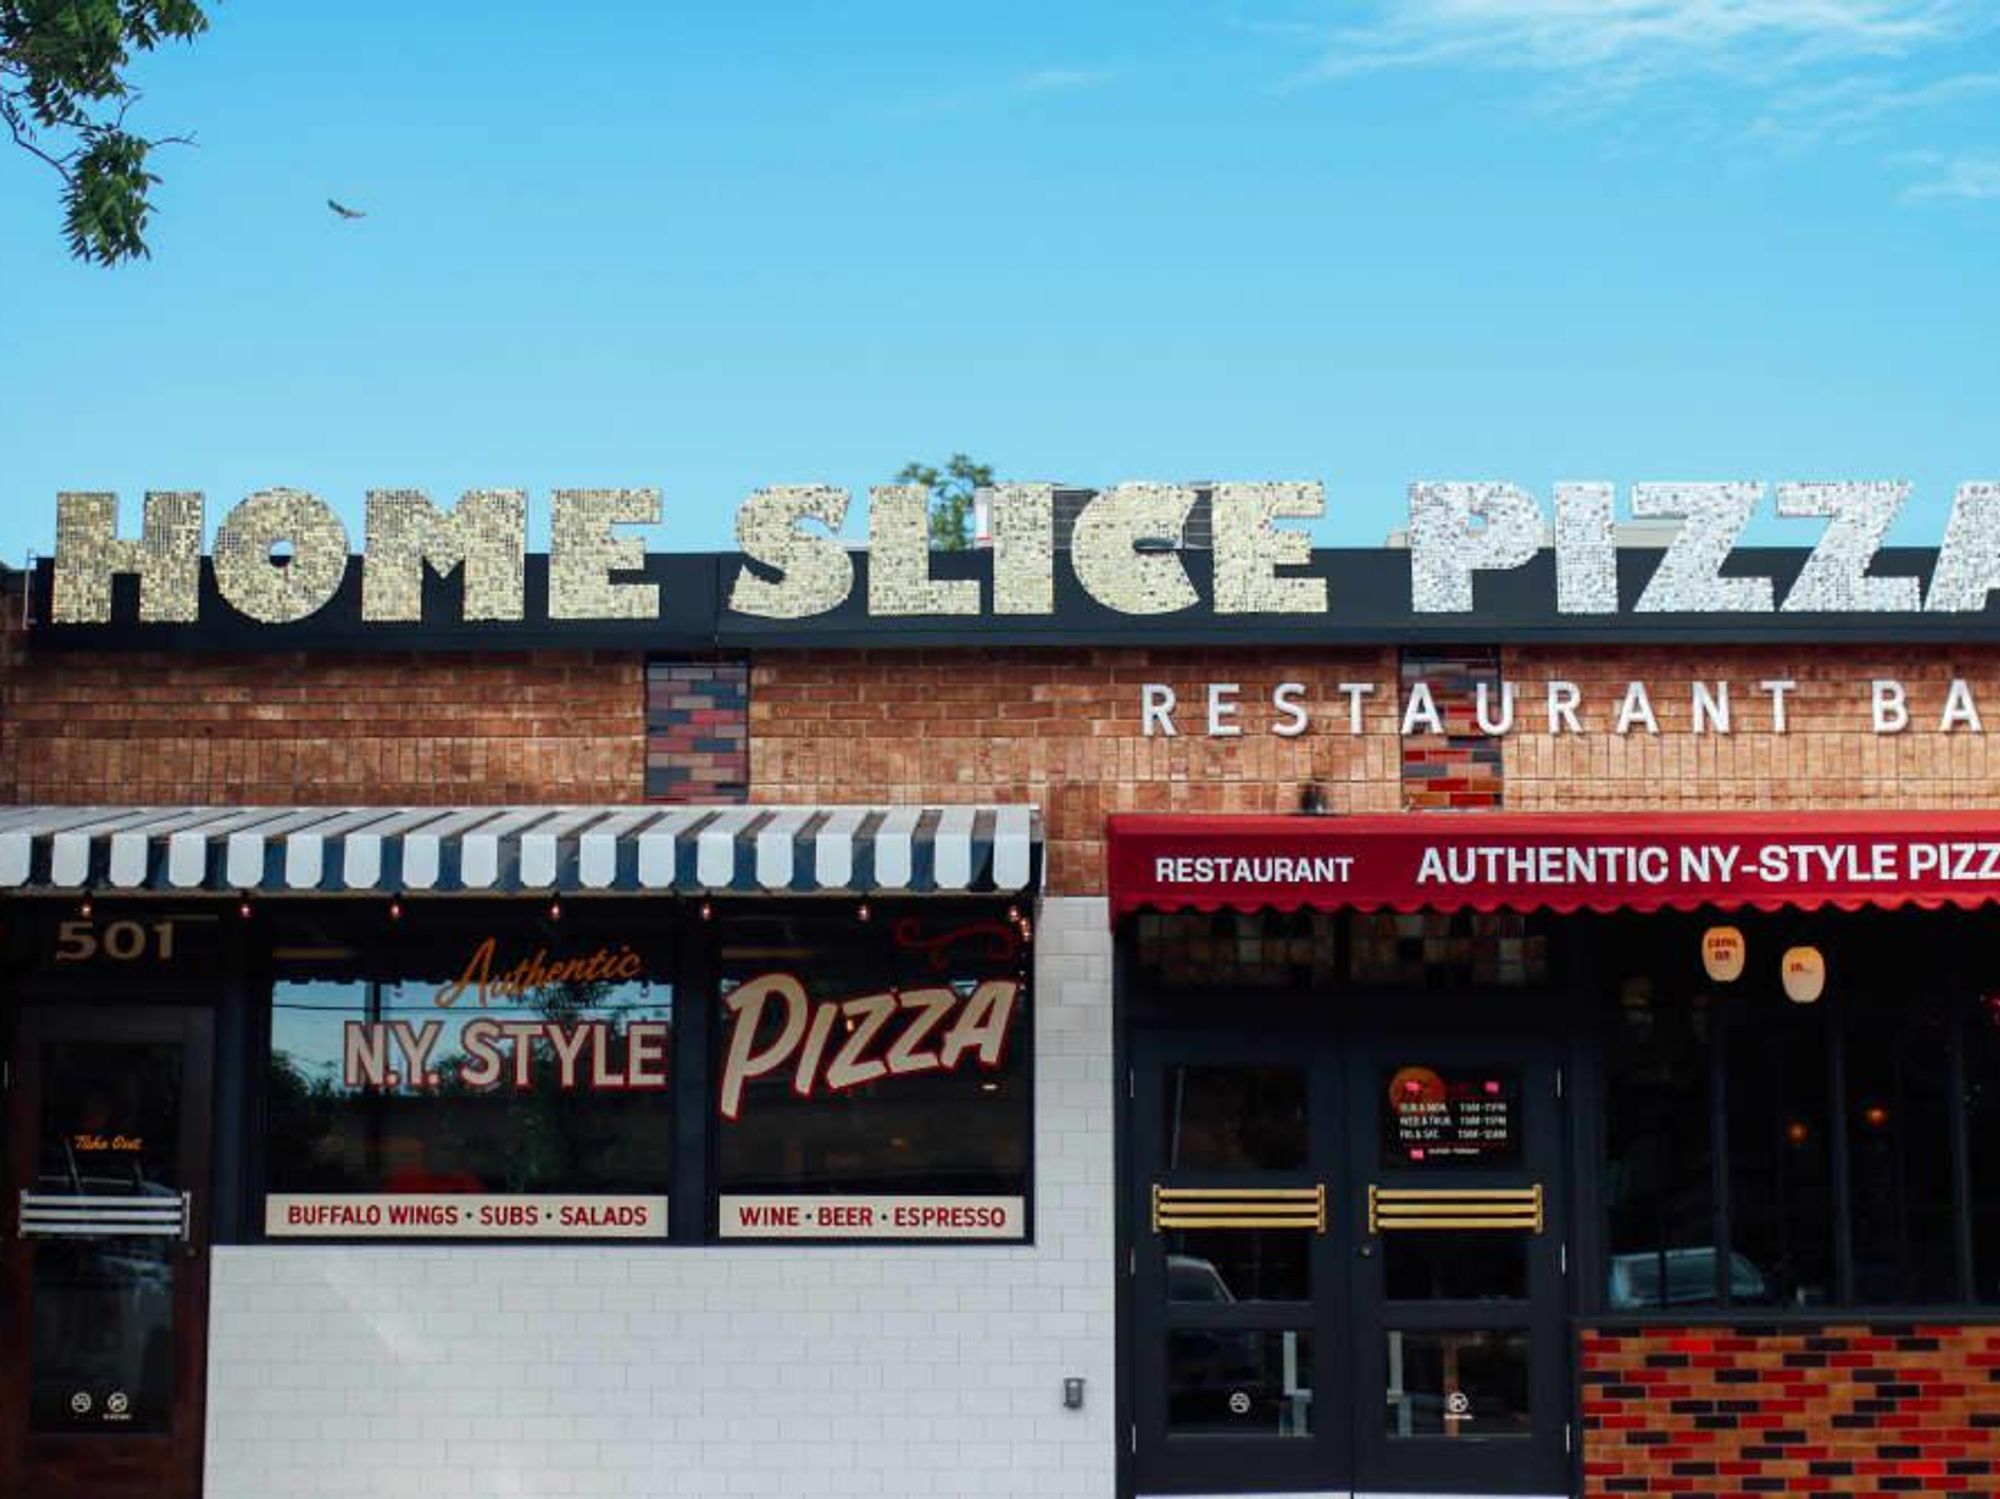 Home Slice Pizza North Loop